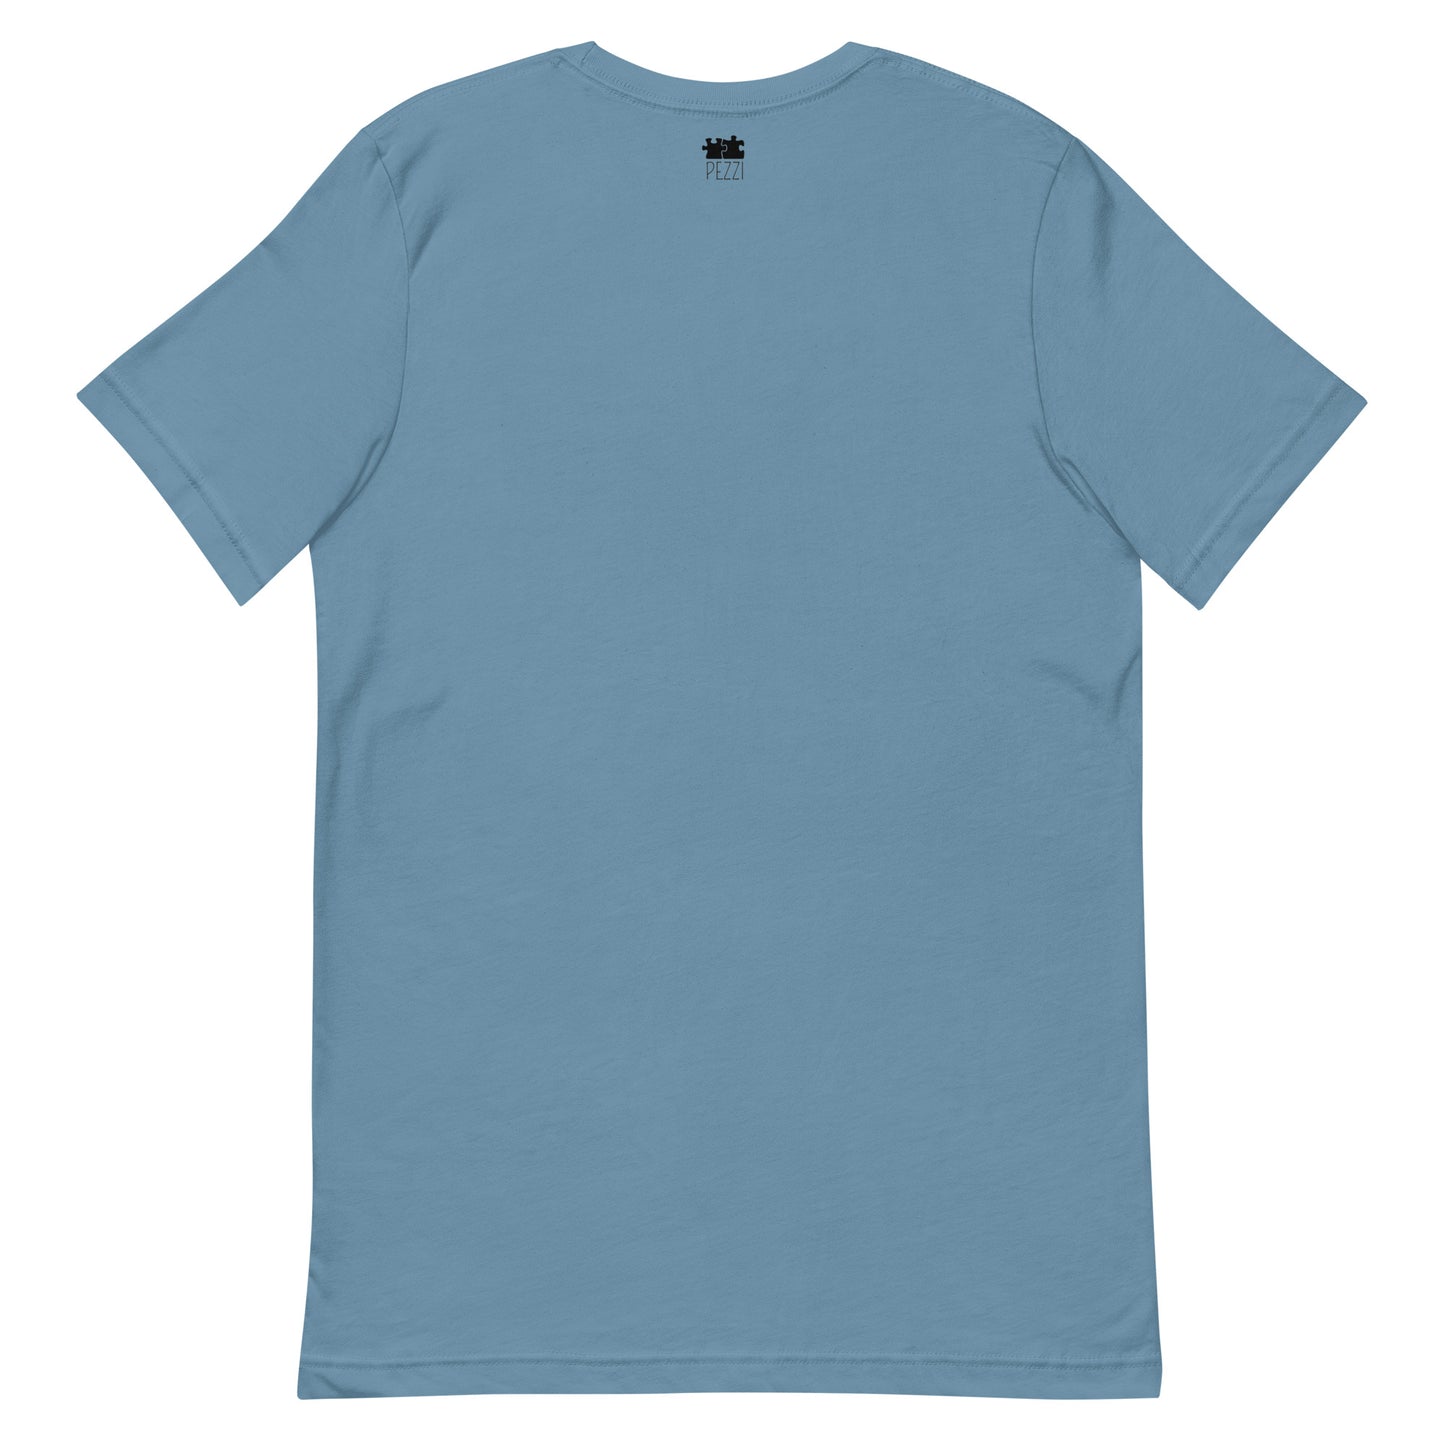 Tortellini on a Unisex t-shirt